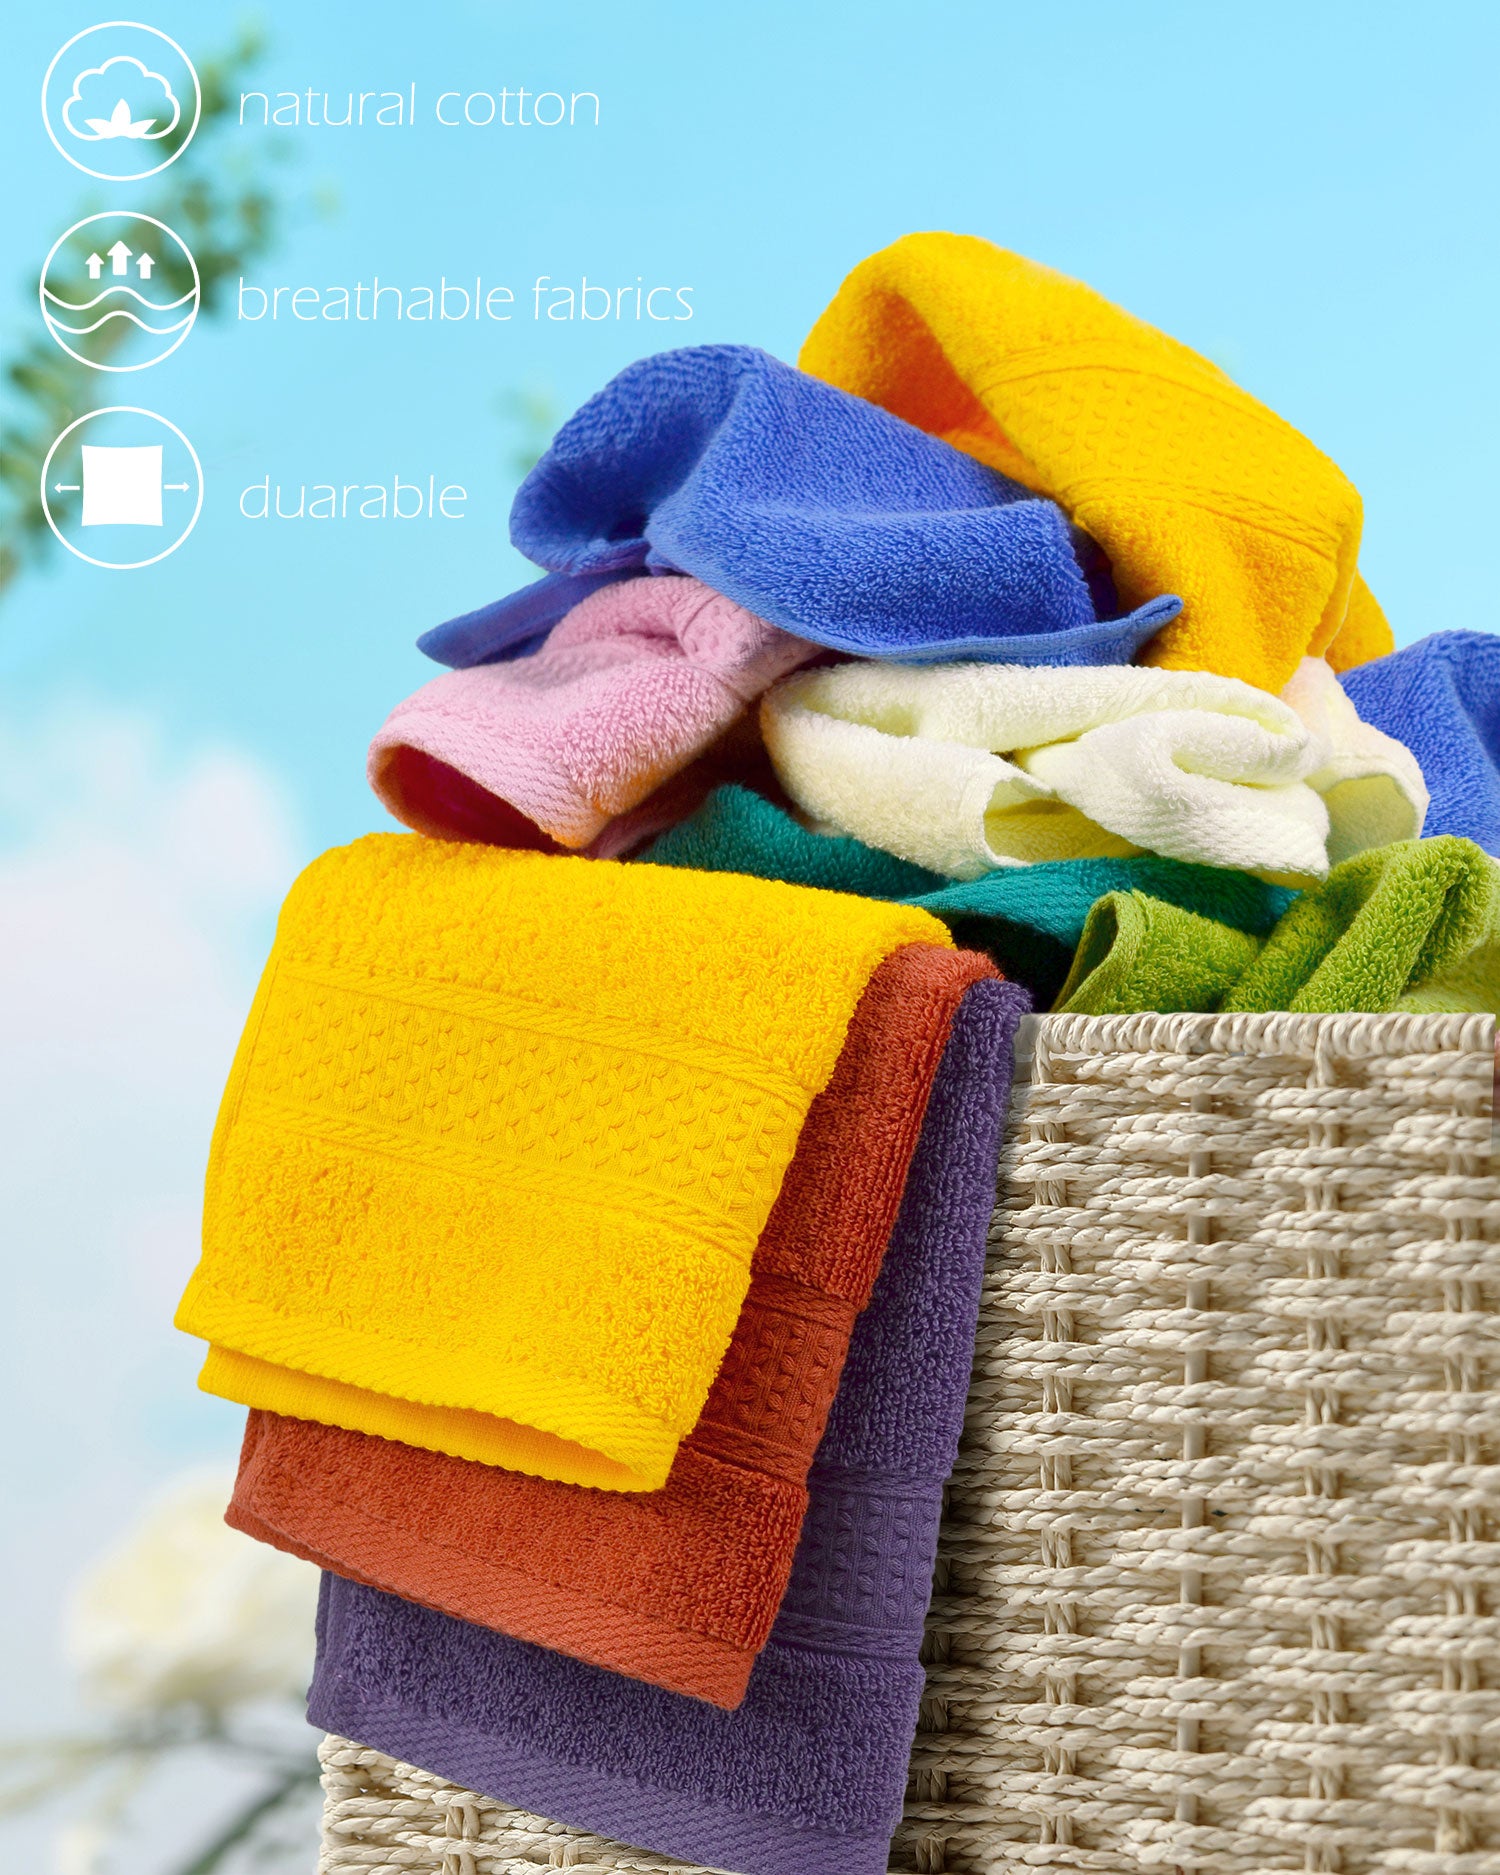 Cleanbear Ultra Soft Washcloths 6 Pack Cotton Face Cloths Wash Cloths